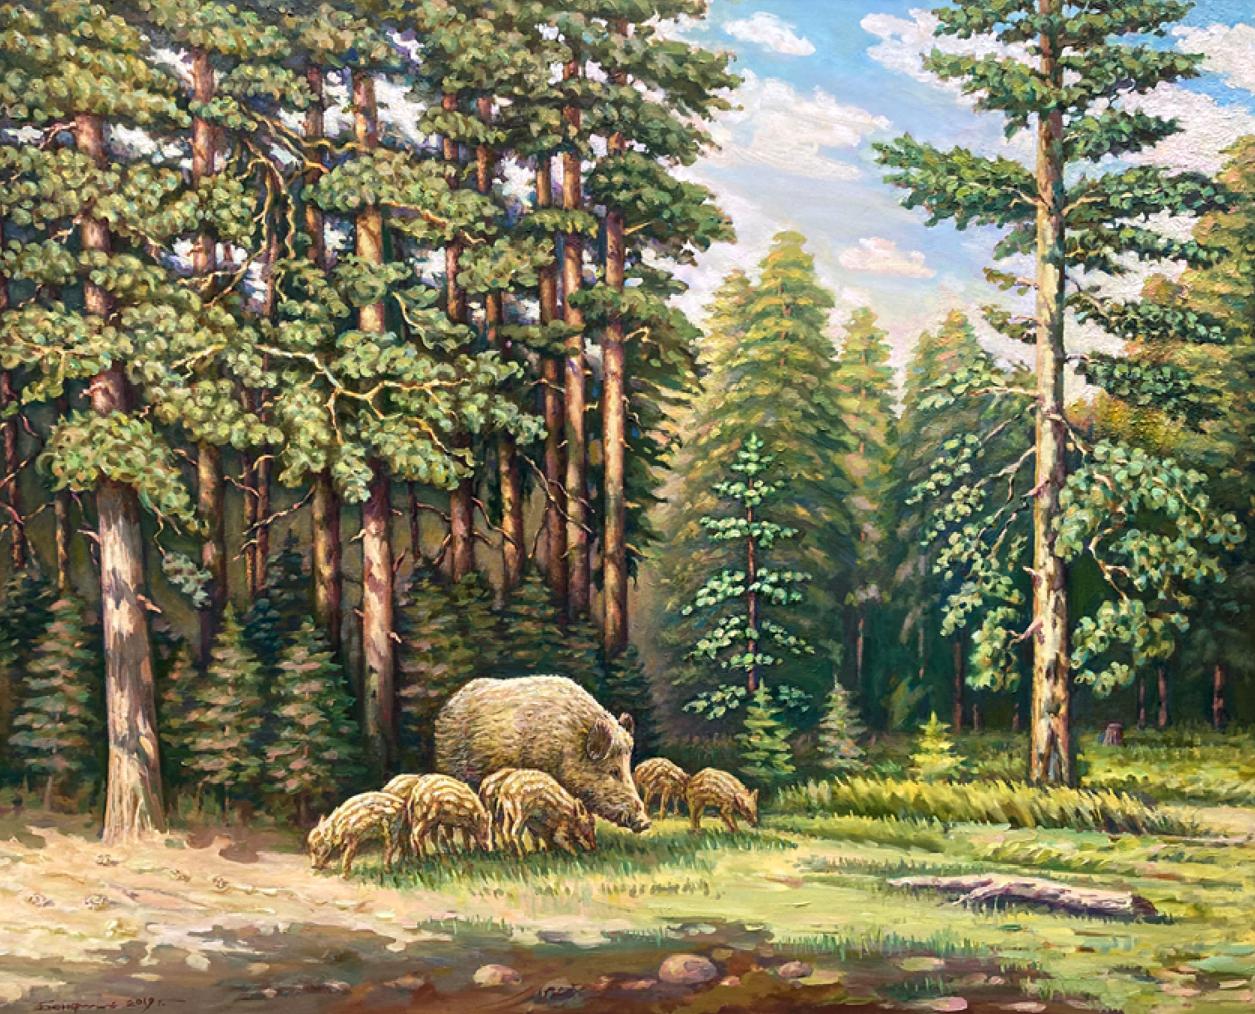 Benfialov's oil painting series, Awakening of Nature